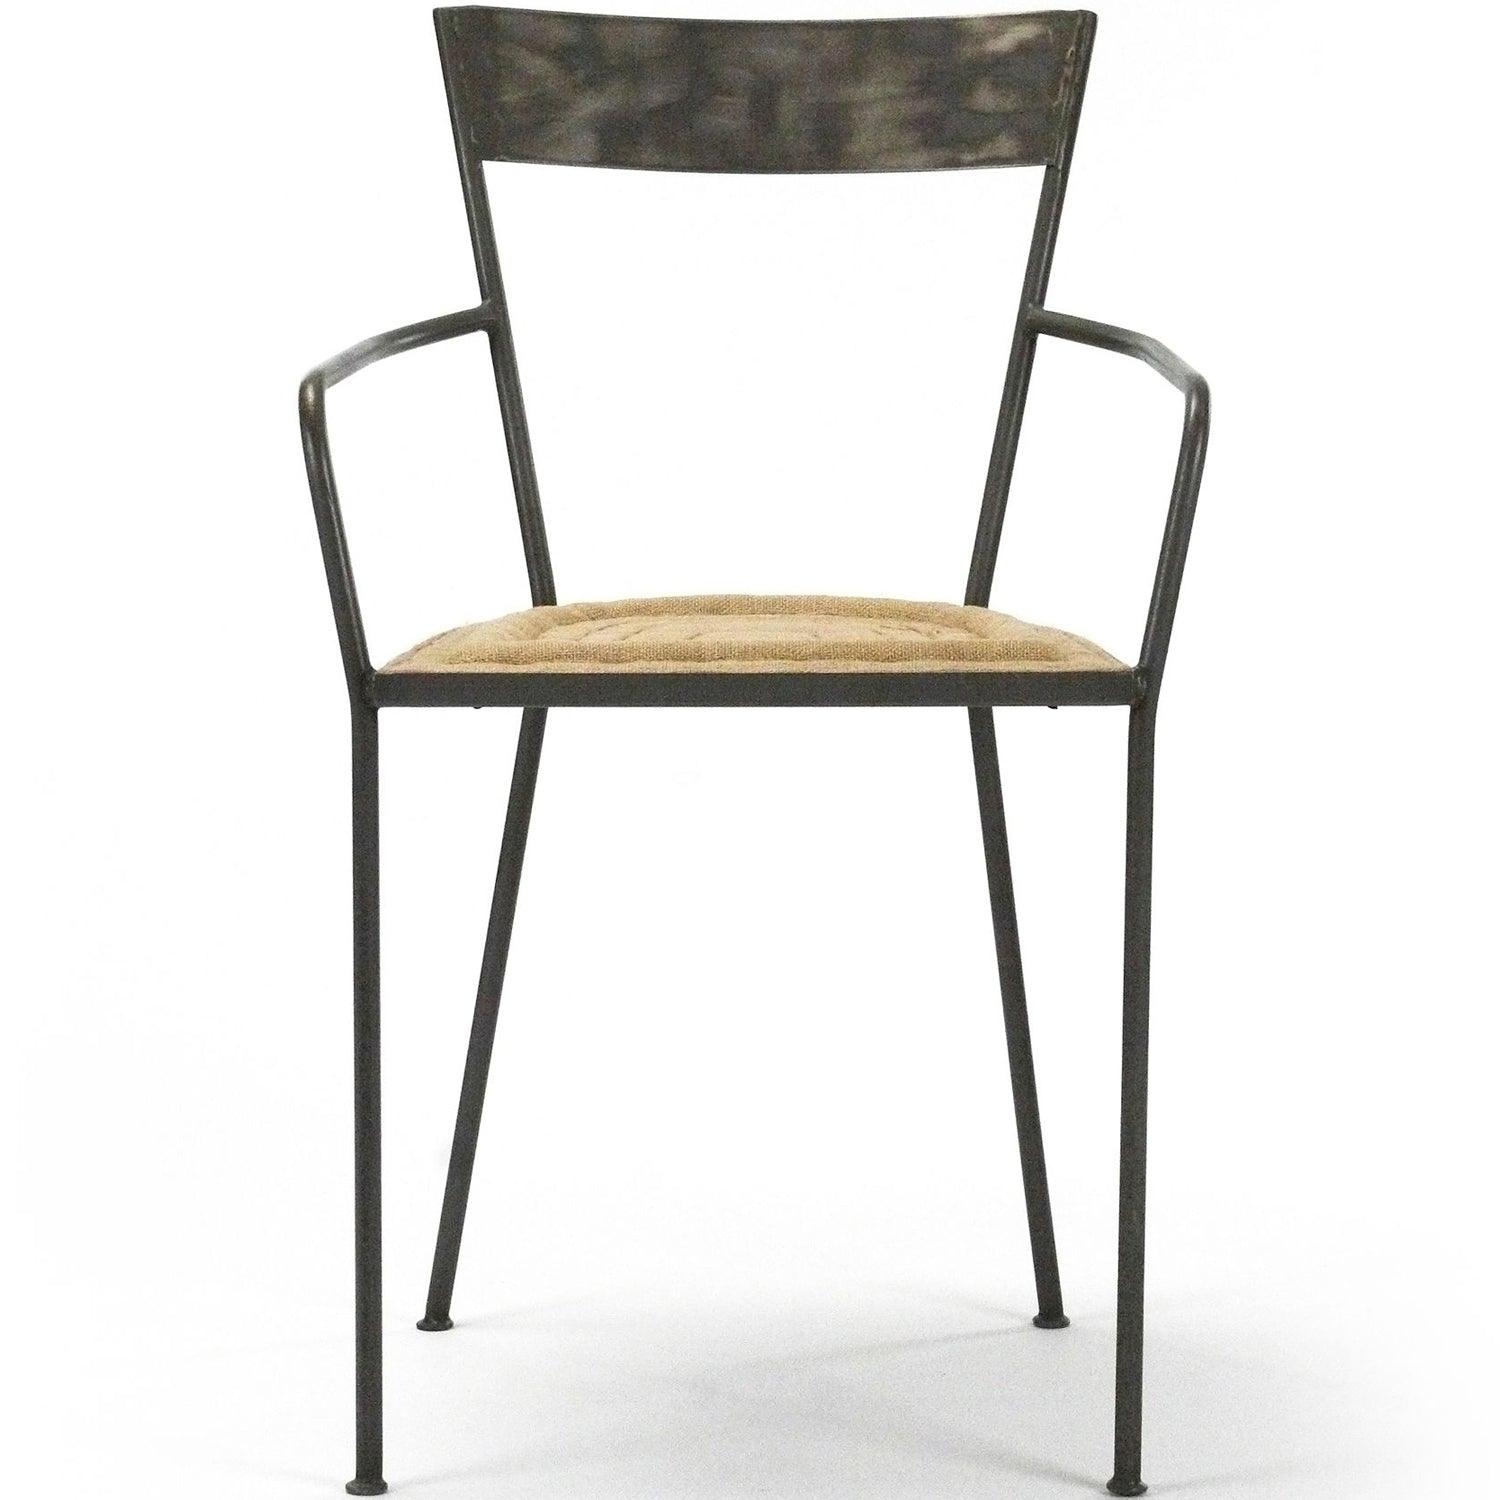 Vintage Industrial Chic Chairs - Belle Escape